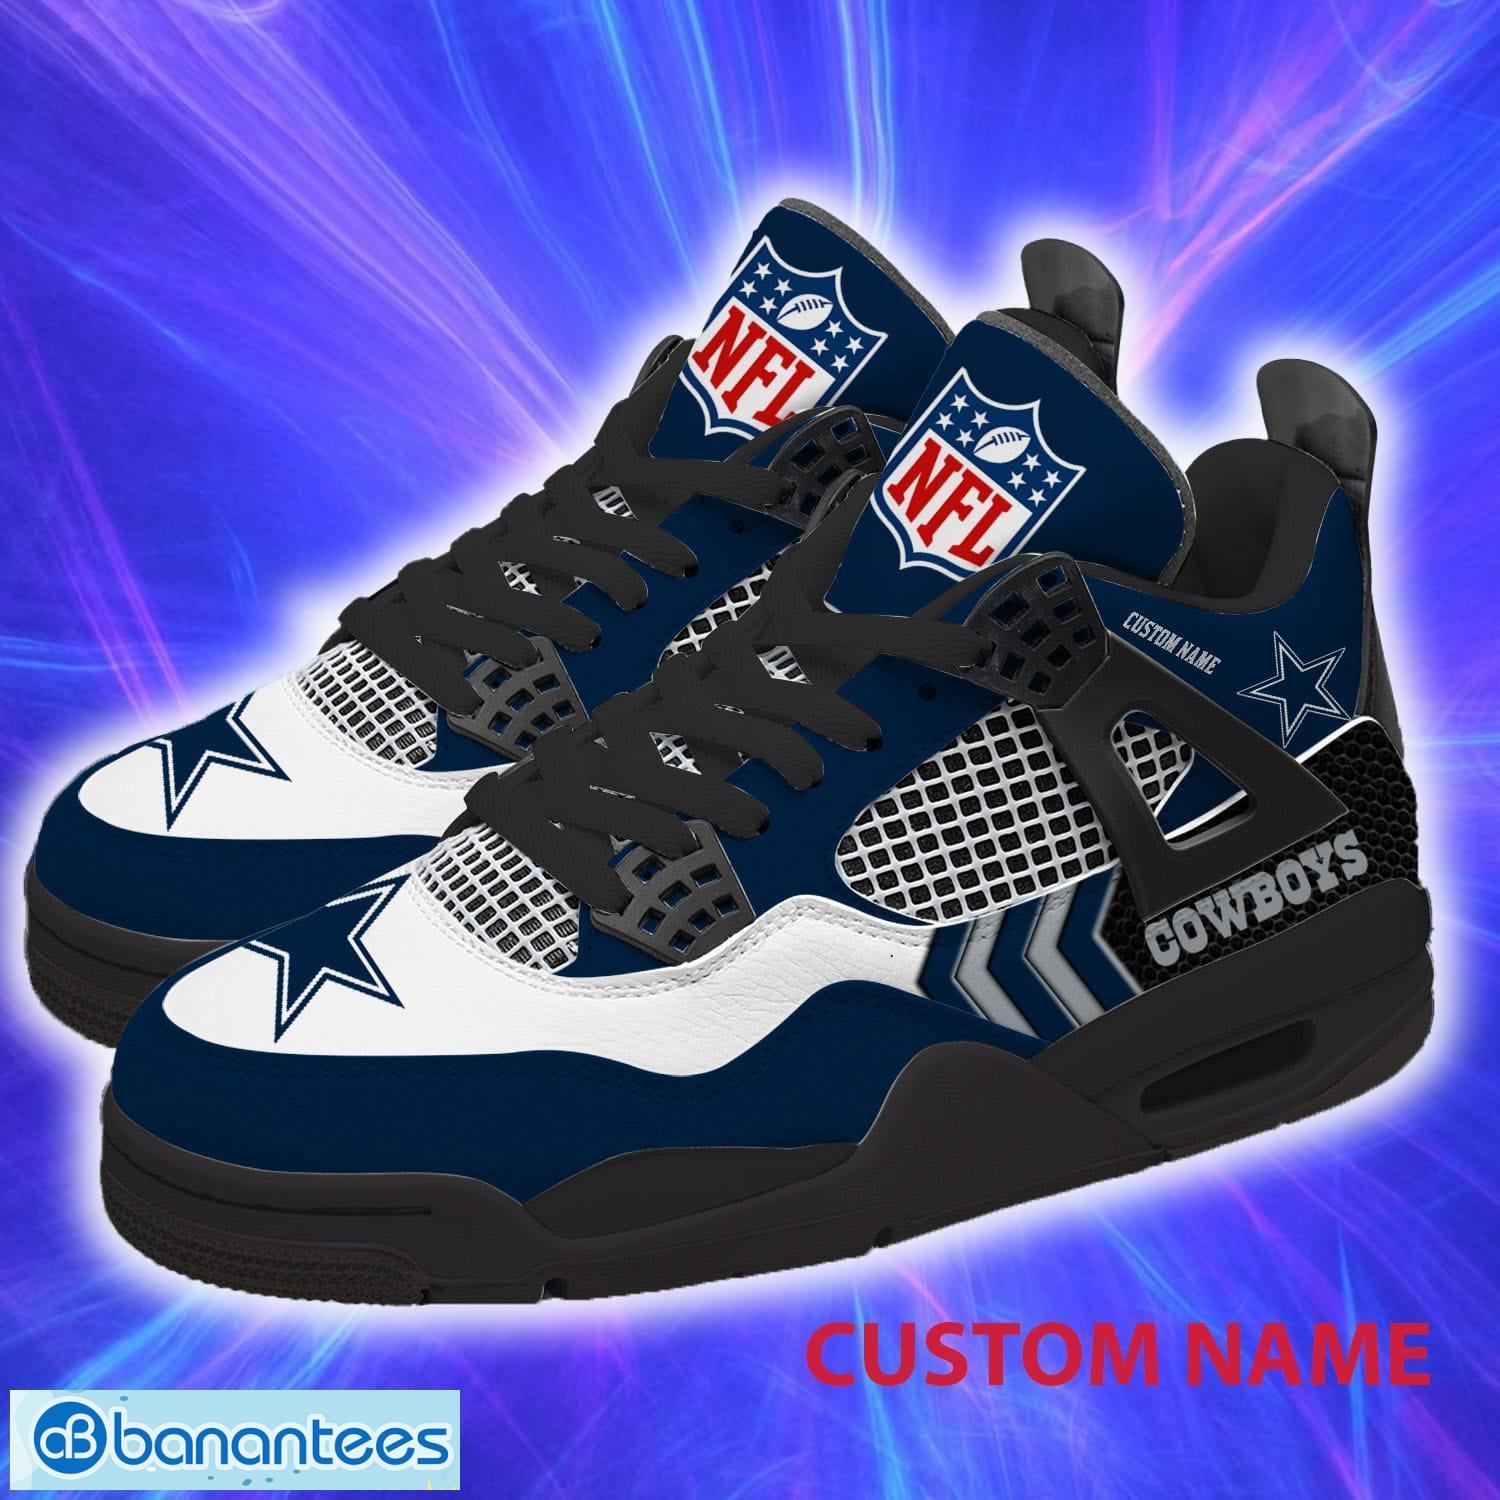 Dallas Cowboy Air Jordan 13 Sneakers Nfl Custom Sport Shoes